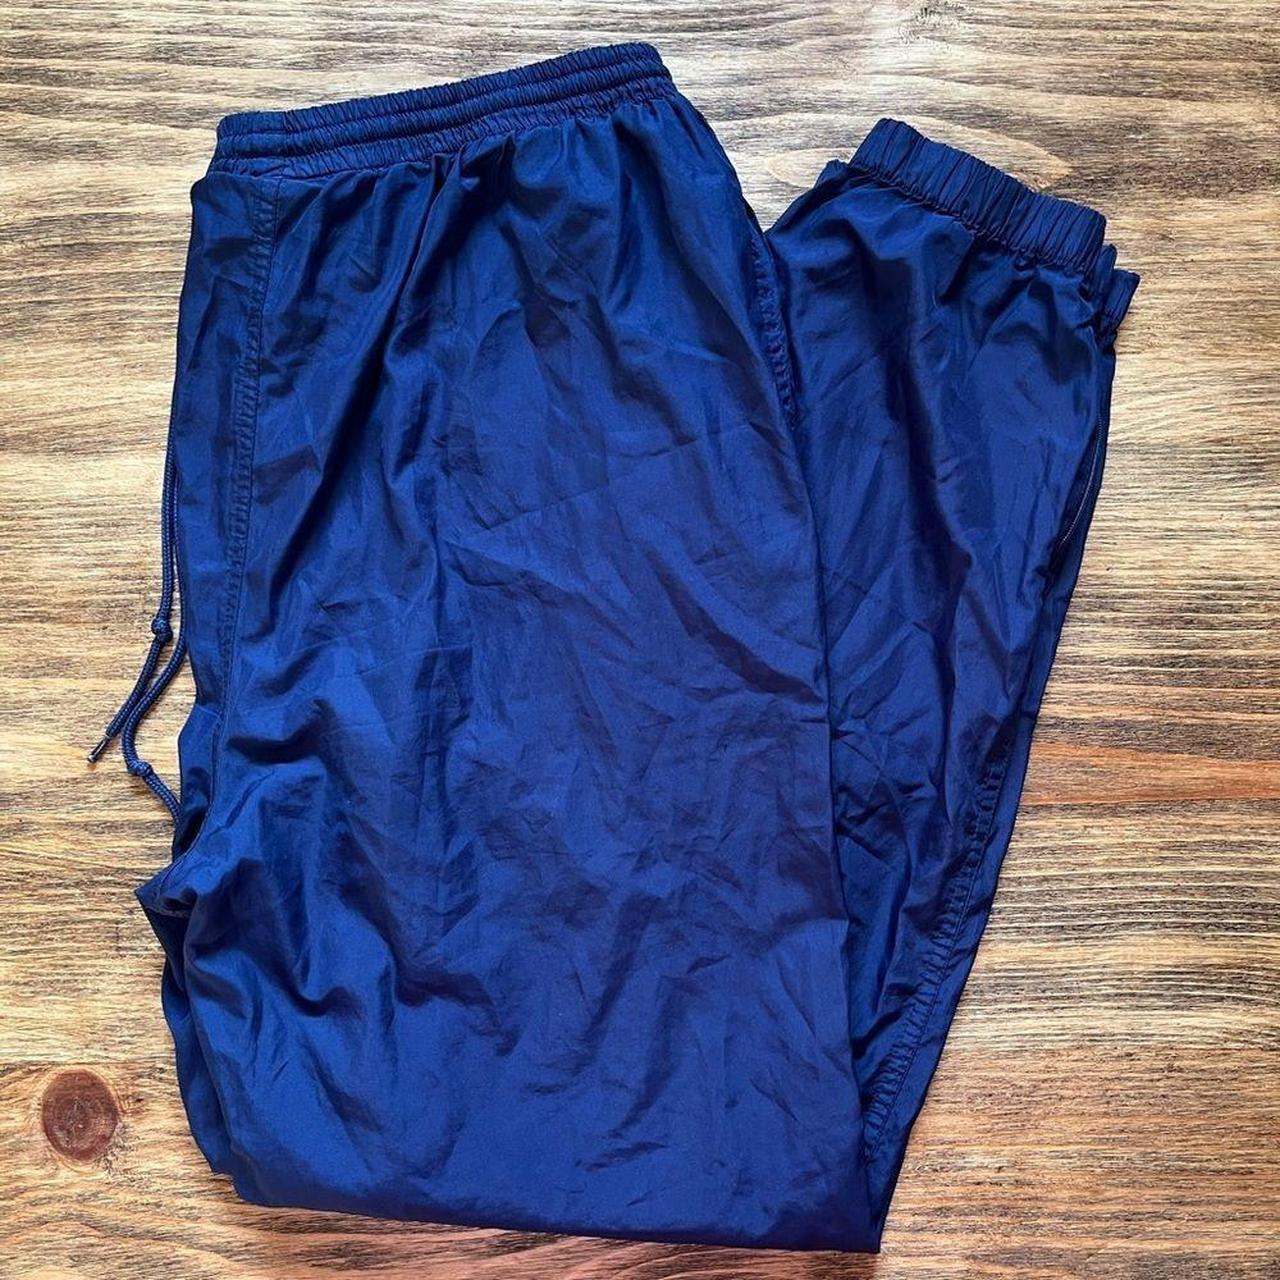 Product Image 2 - Item: Adidas Vintage Sweatpants
Size: Medium